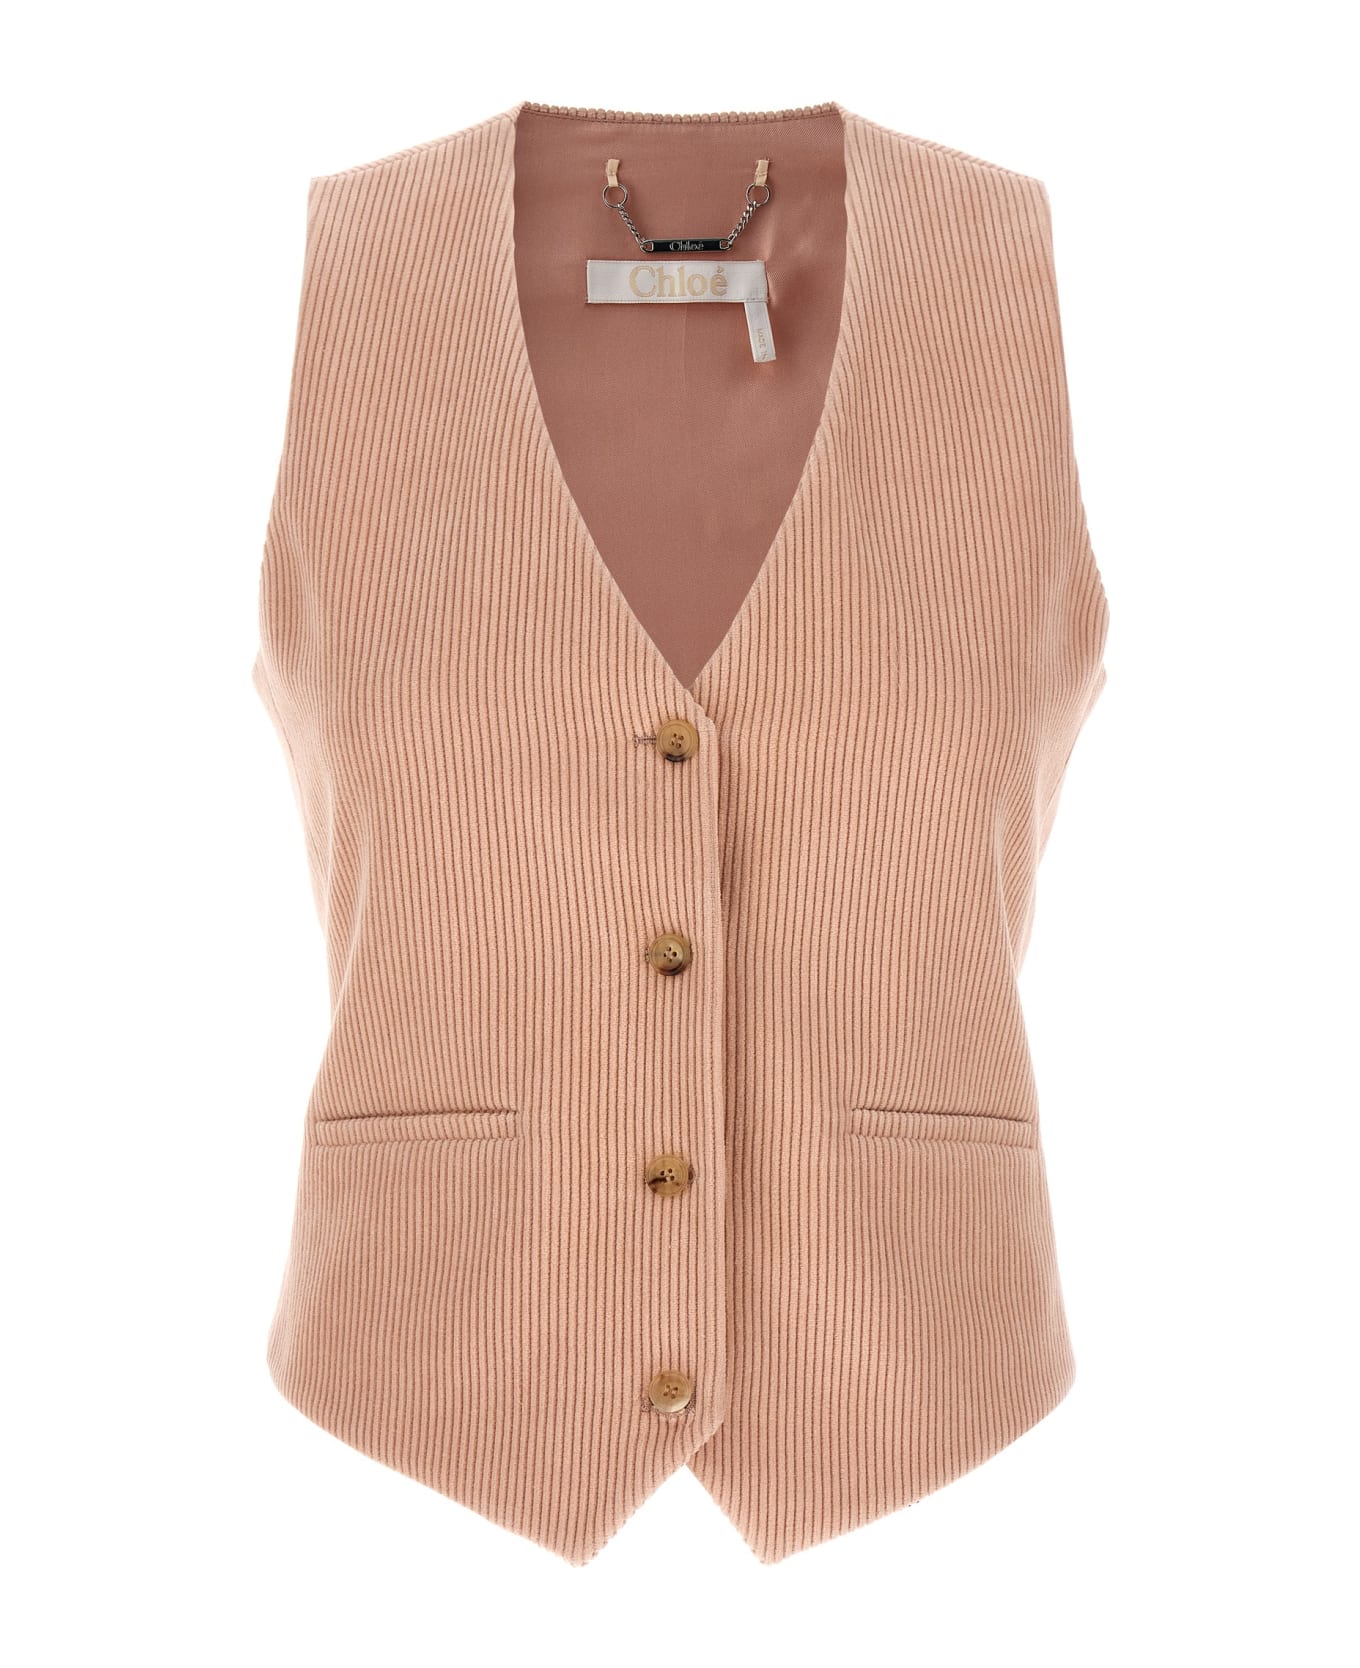 Chloé Corduroy Vest - Pink ベスト